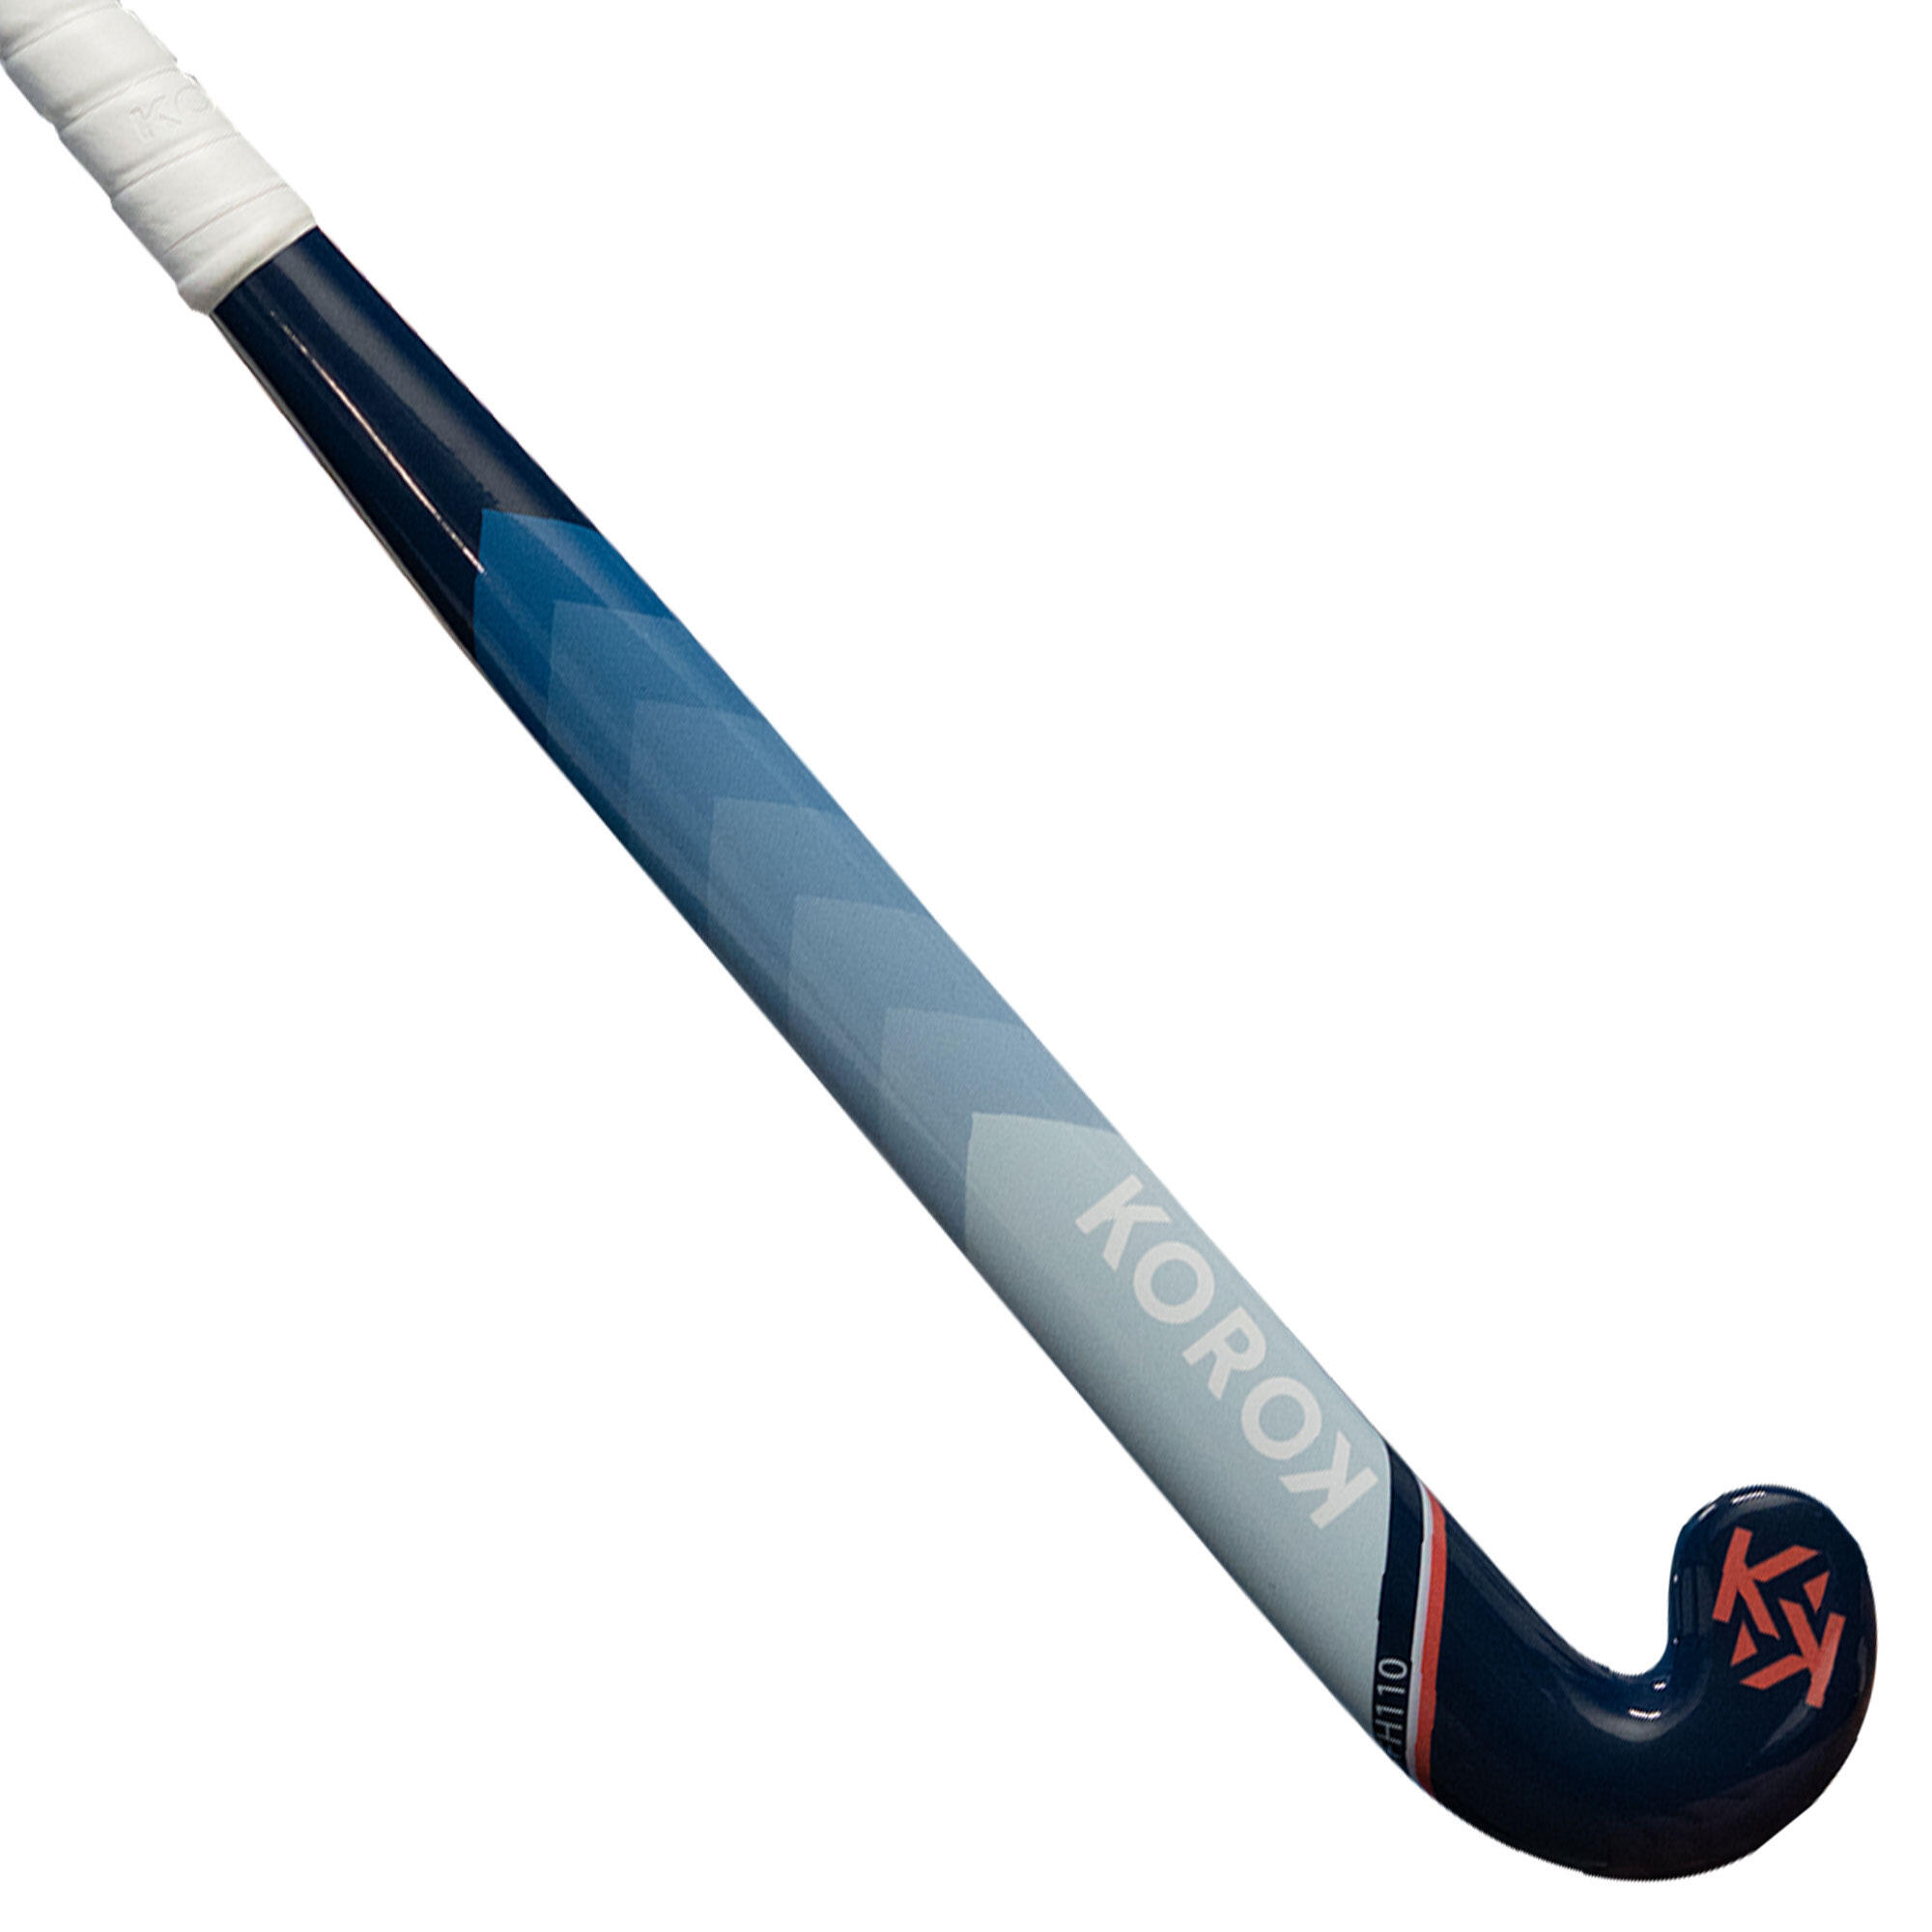 ALFA Y30 Composite Hockey Stick (Multicolour) Usage, Benefits, Reviews, Price Compare